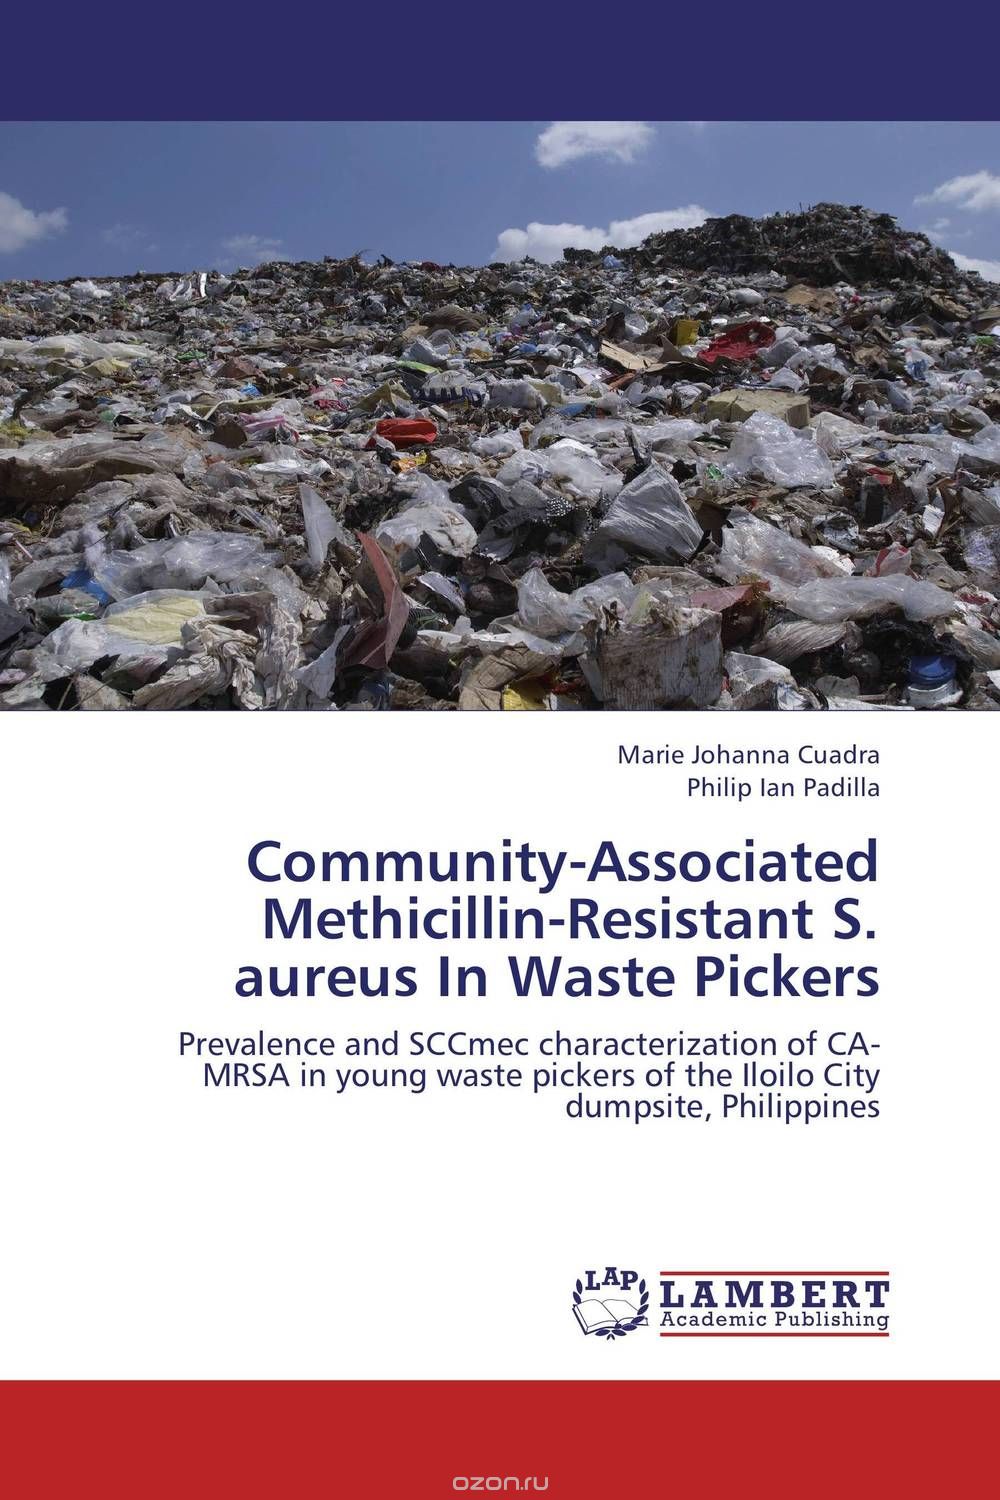 Скачать книгу "Community-Associated Methicillin-Resistant S. aureus In Waste Pickers"